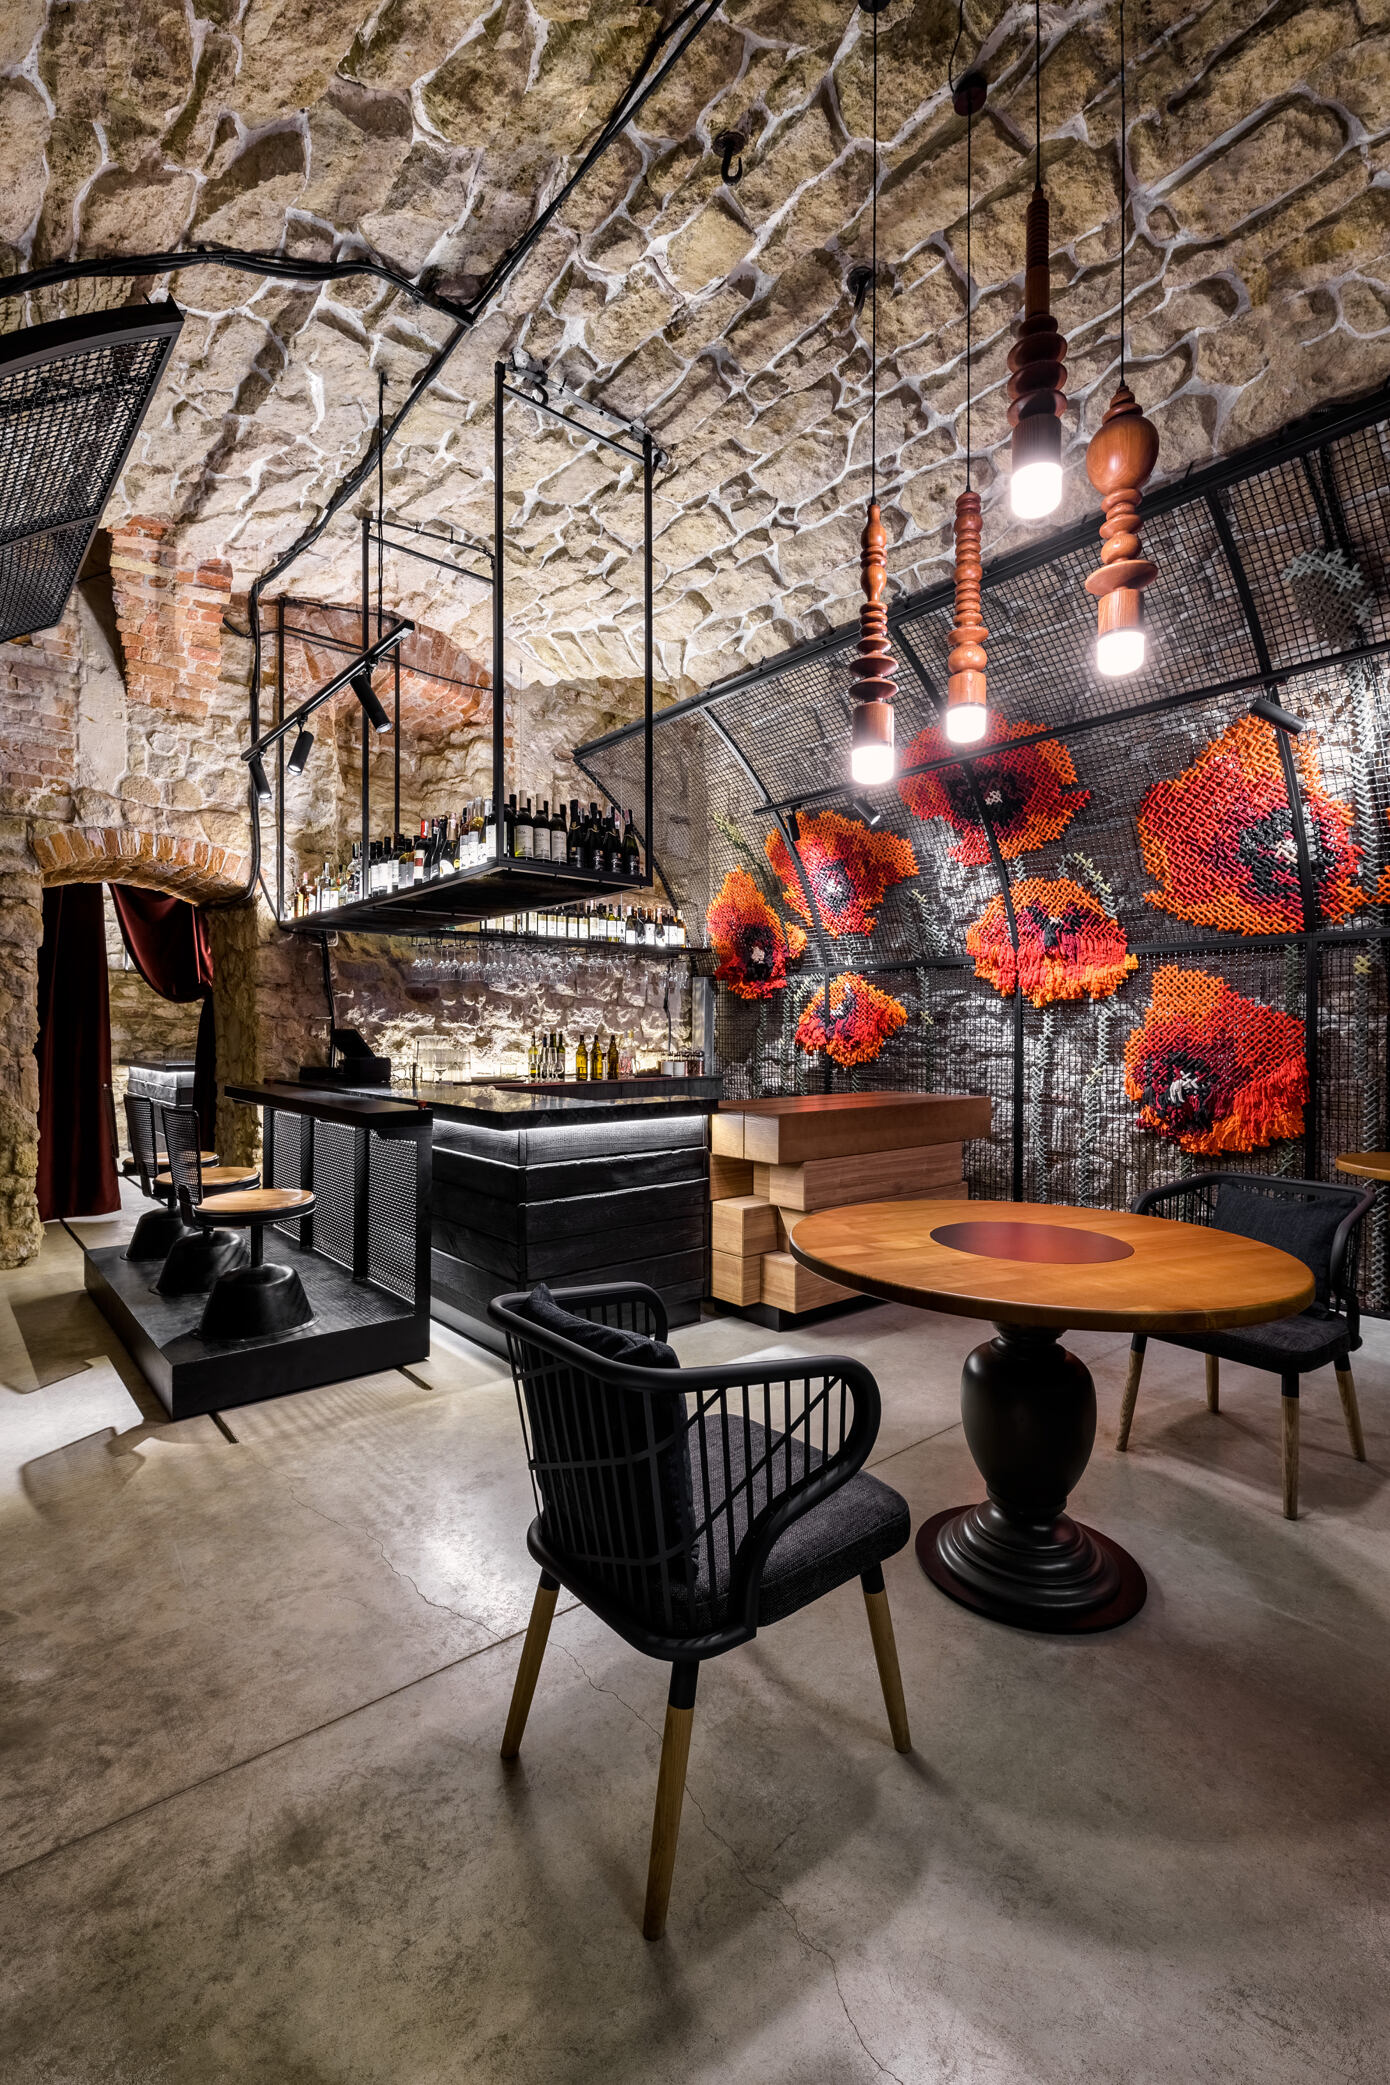 Ostannya Barykada Lviv: A Restaurant & Art Space in Lviv